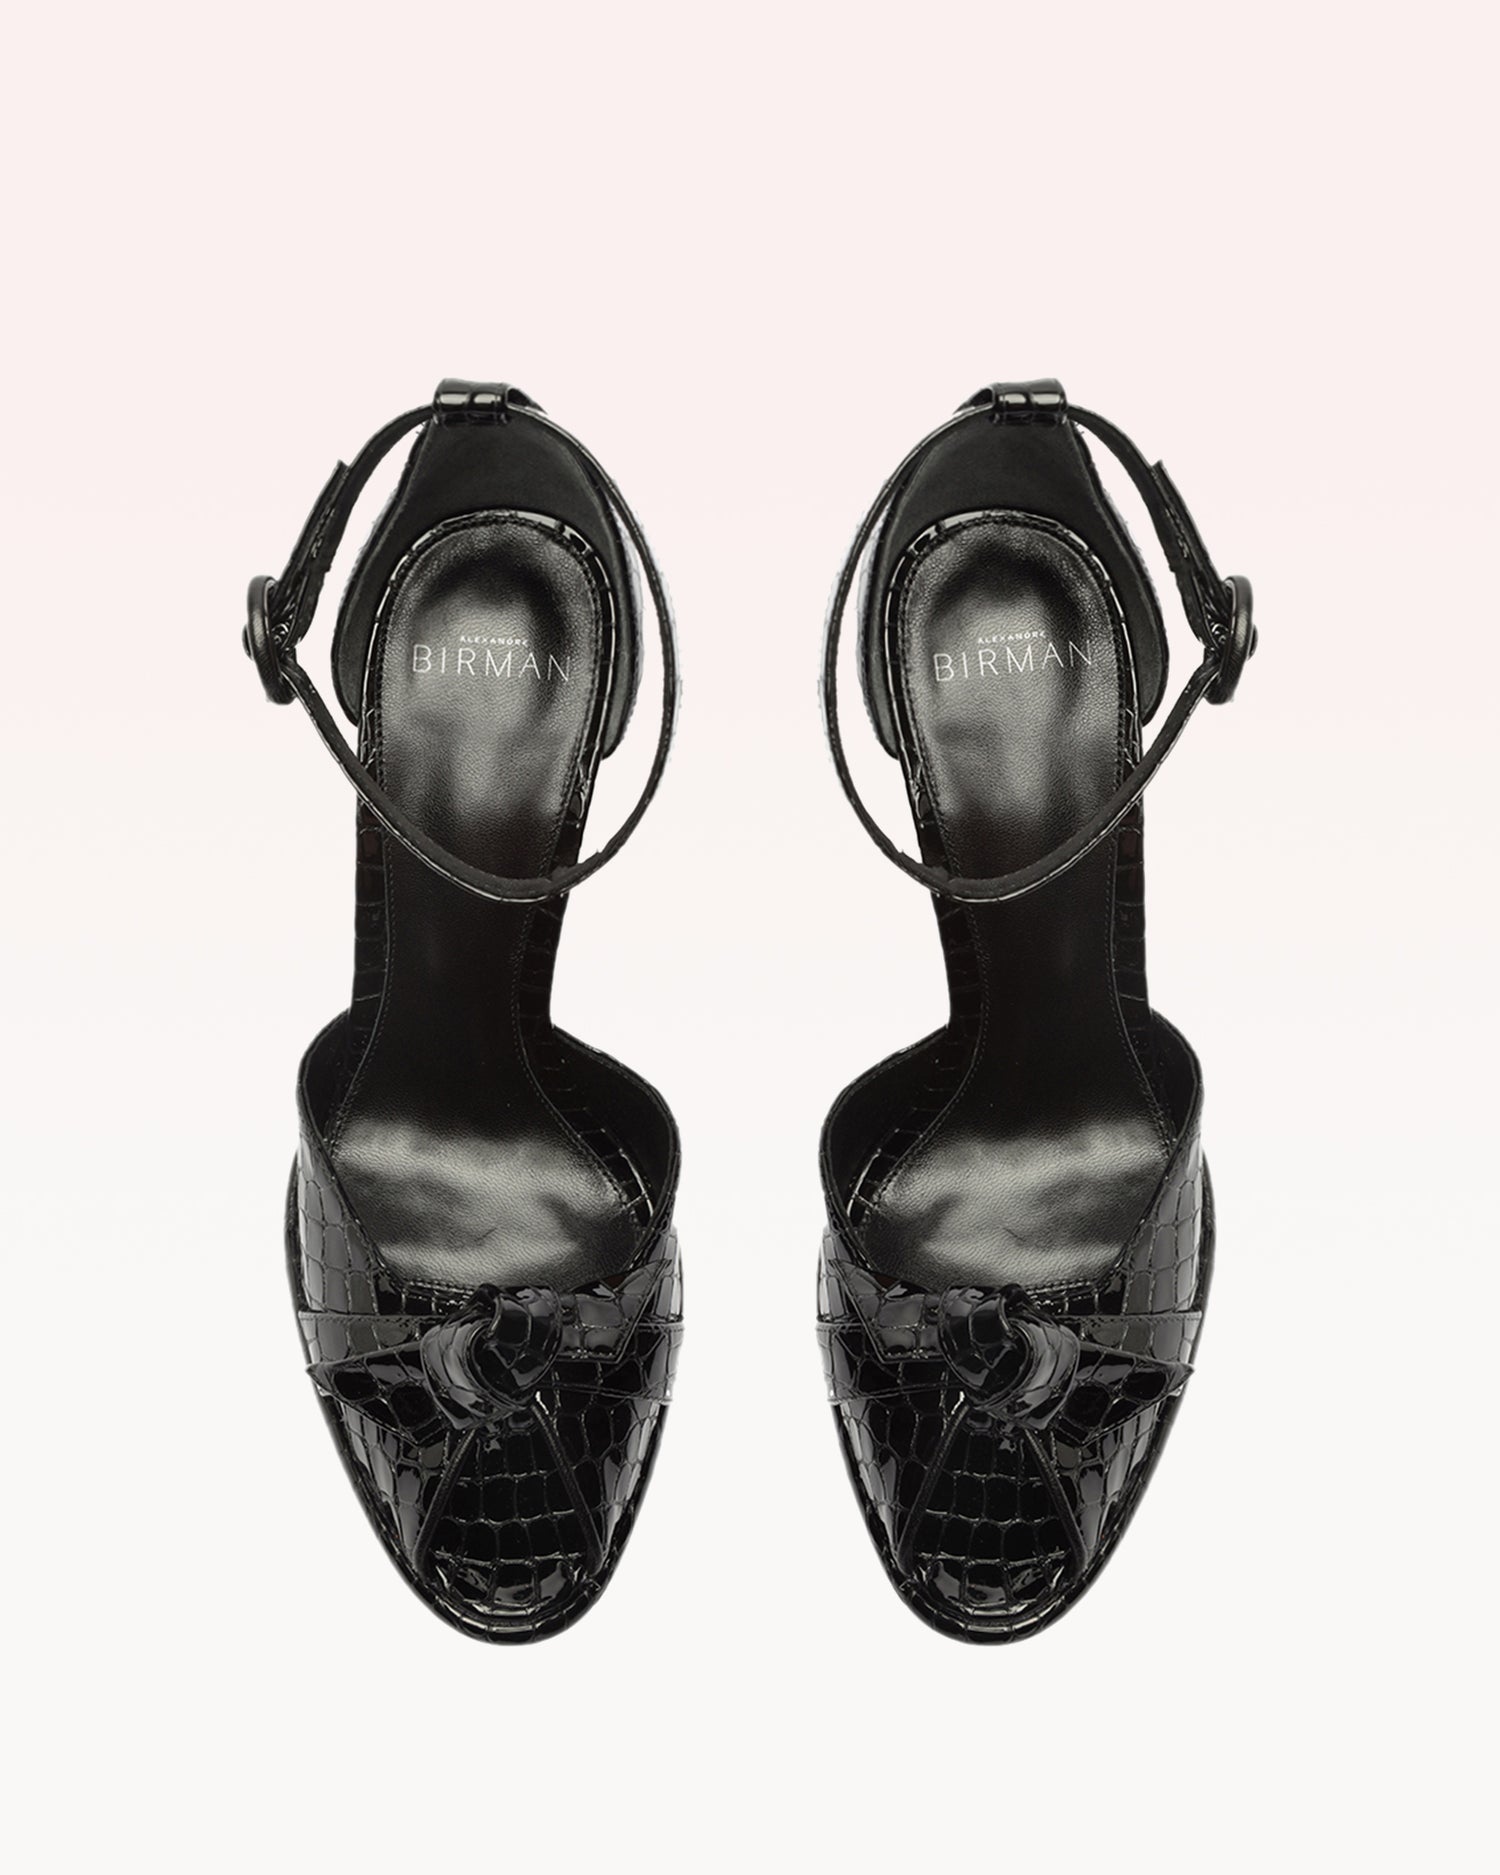 Pepitta 120 Crocco Black Sandals F/23   